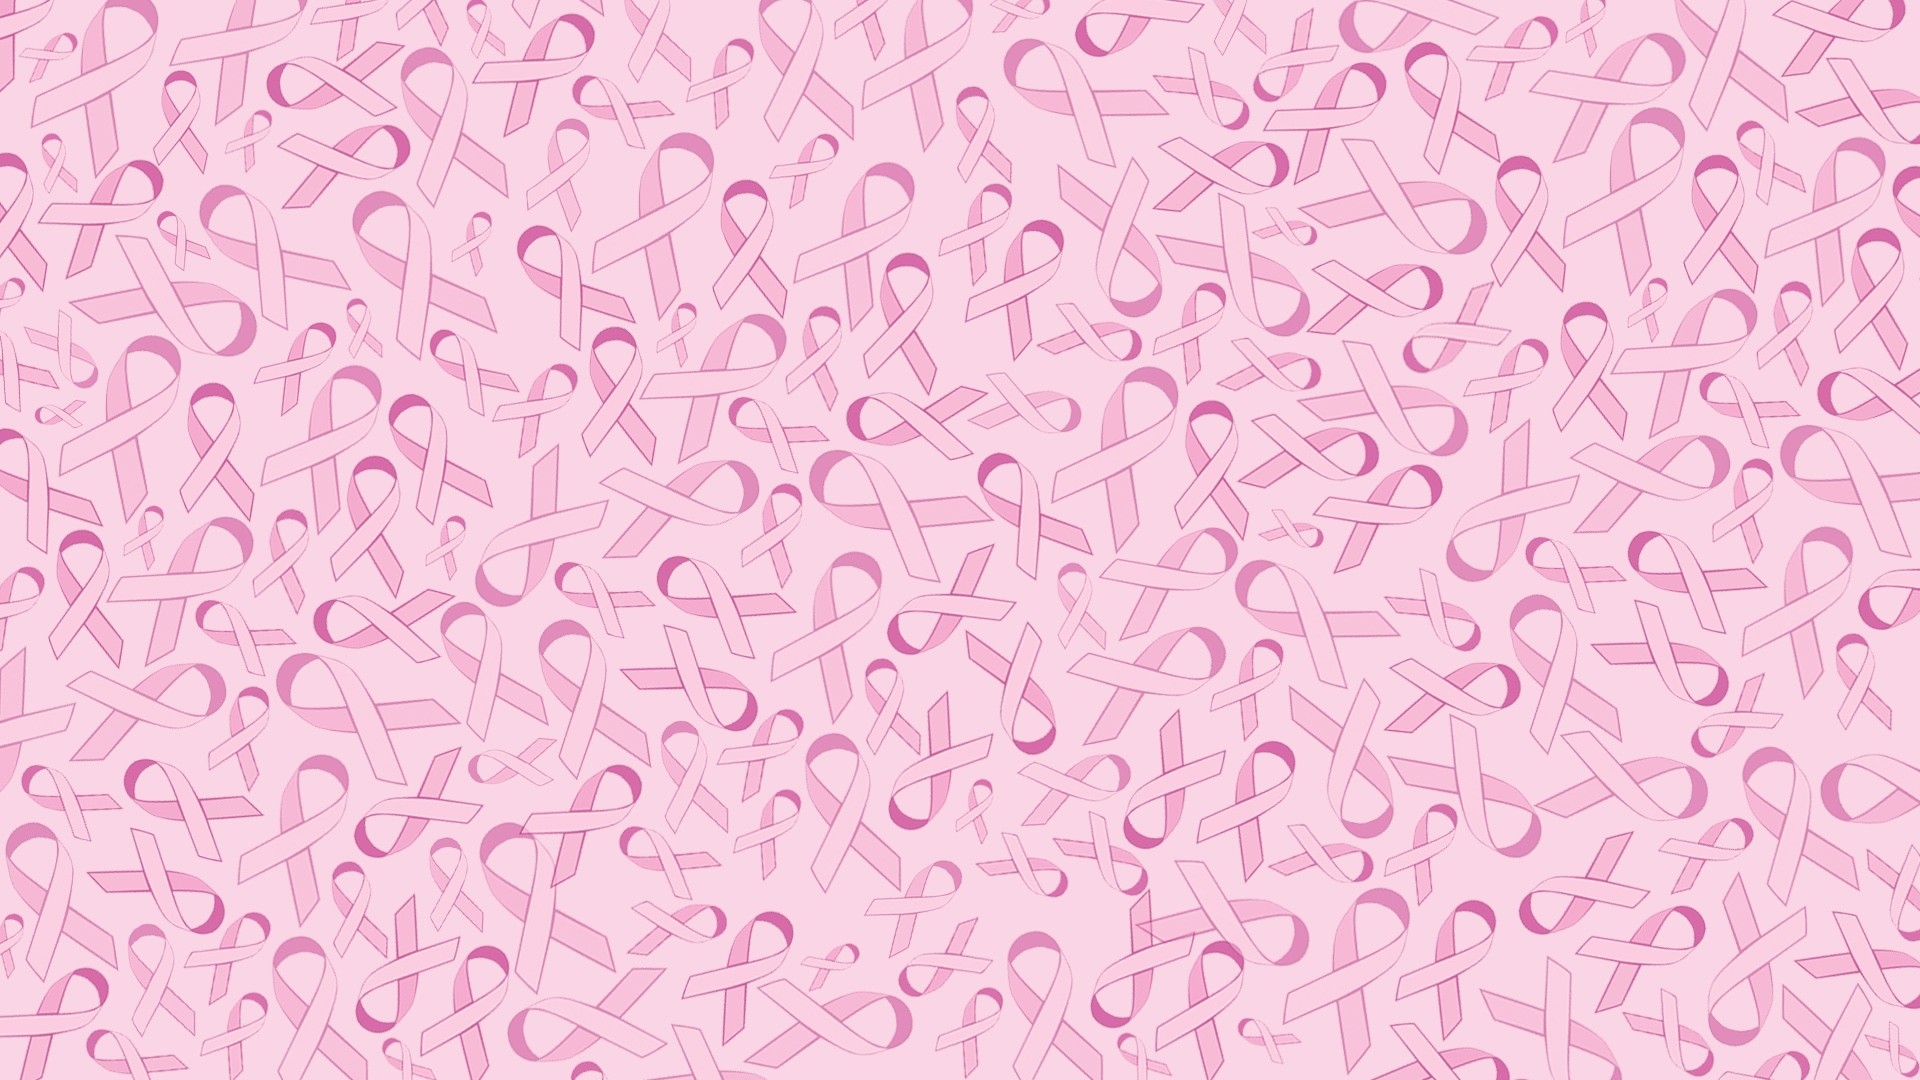 Breast Cancer Awareness Background Image